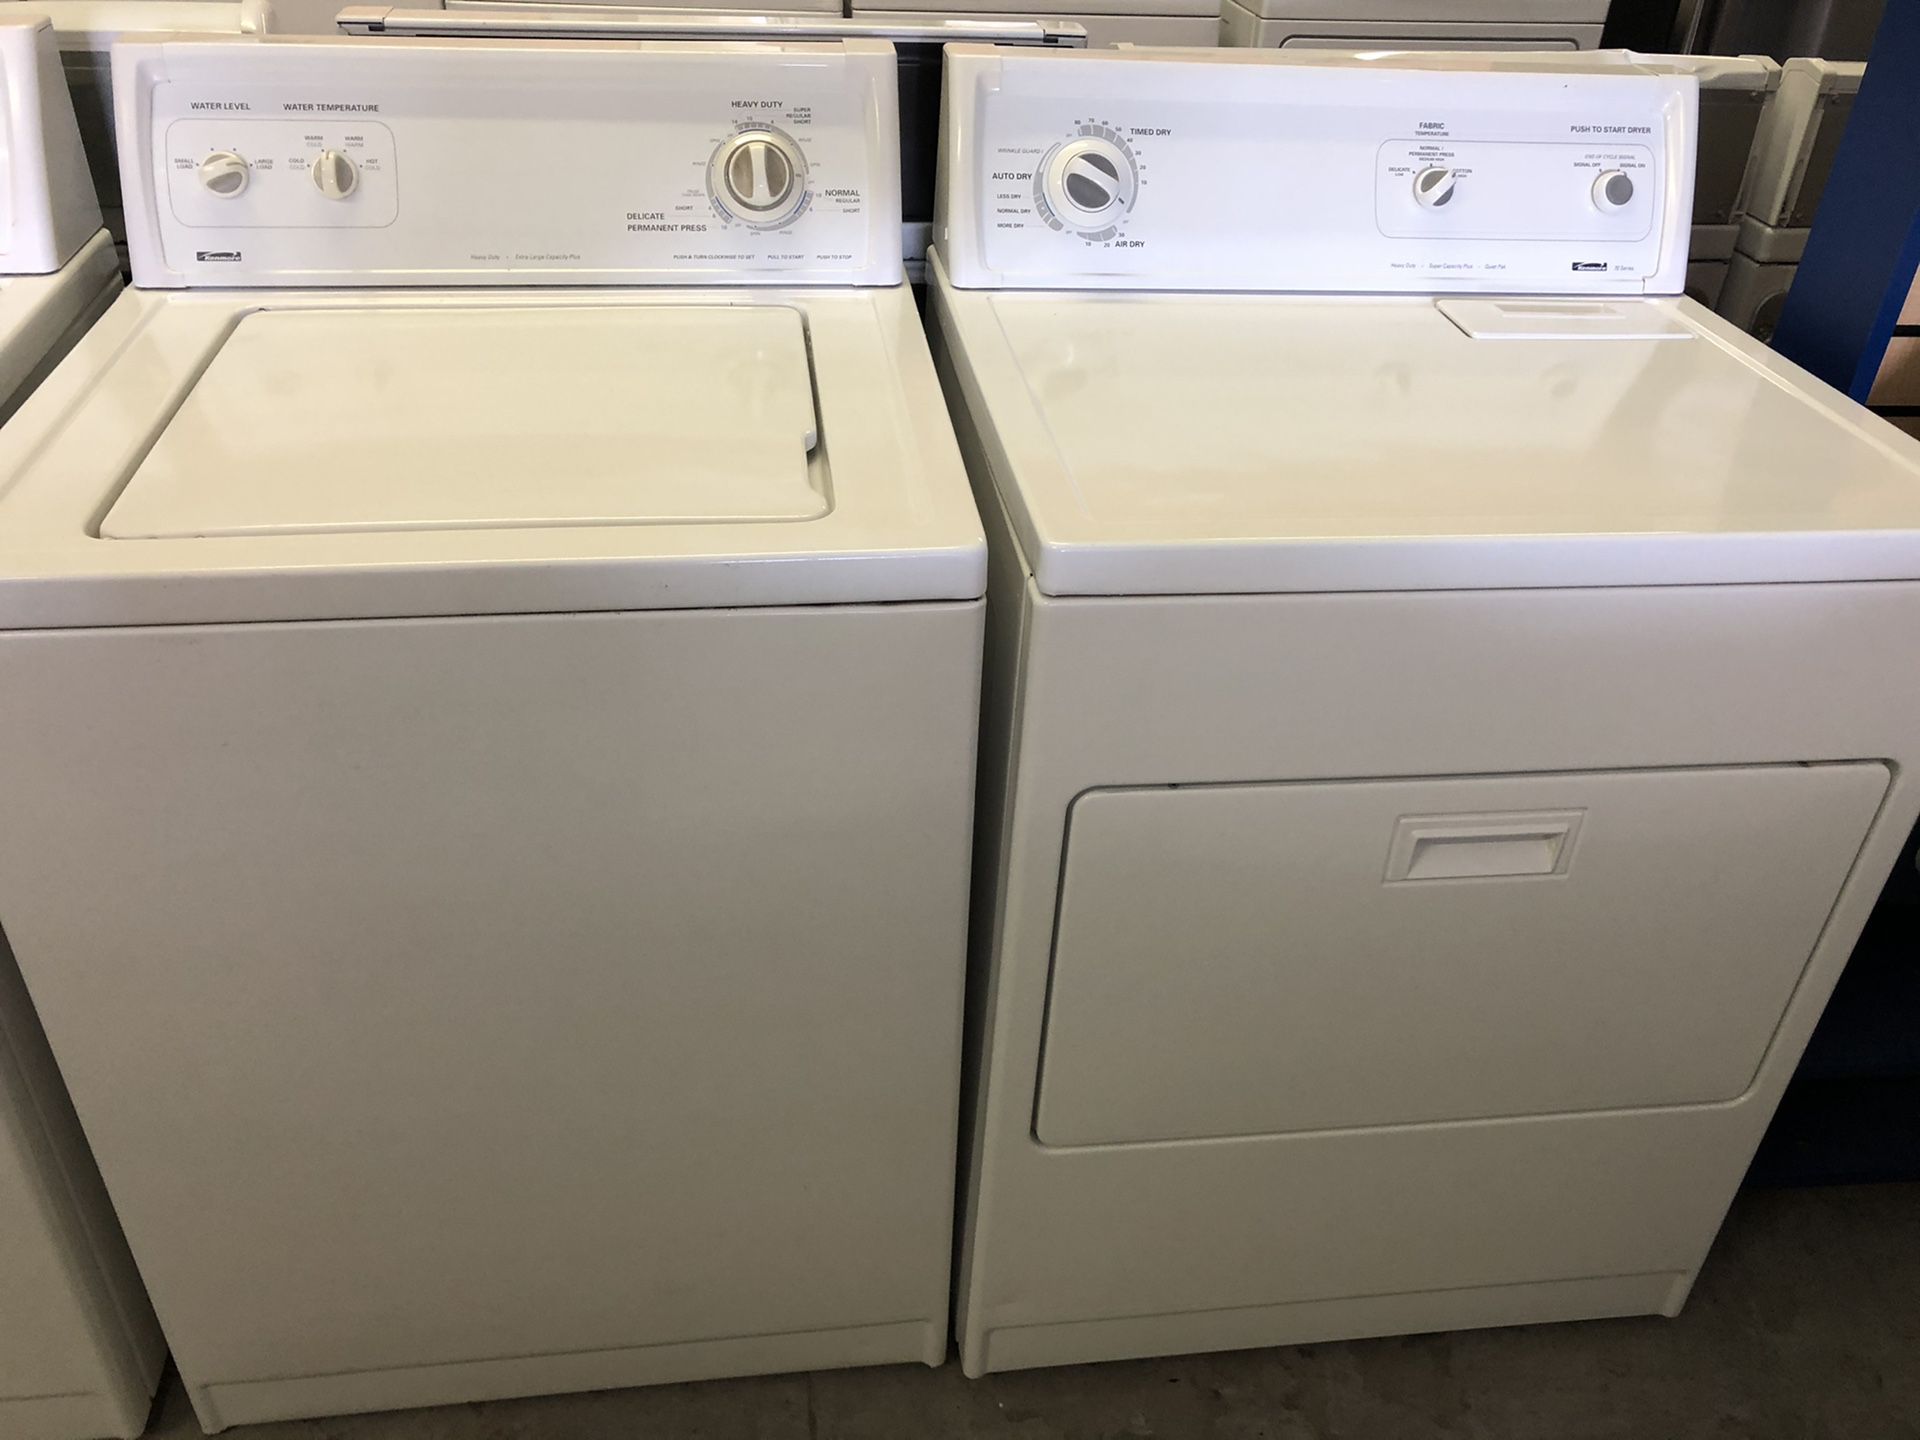 Matching Heavy Duty Super Capacity Washer Dryer Pair